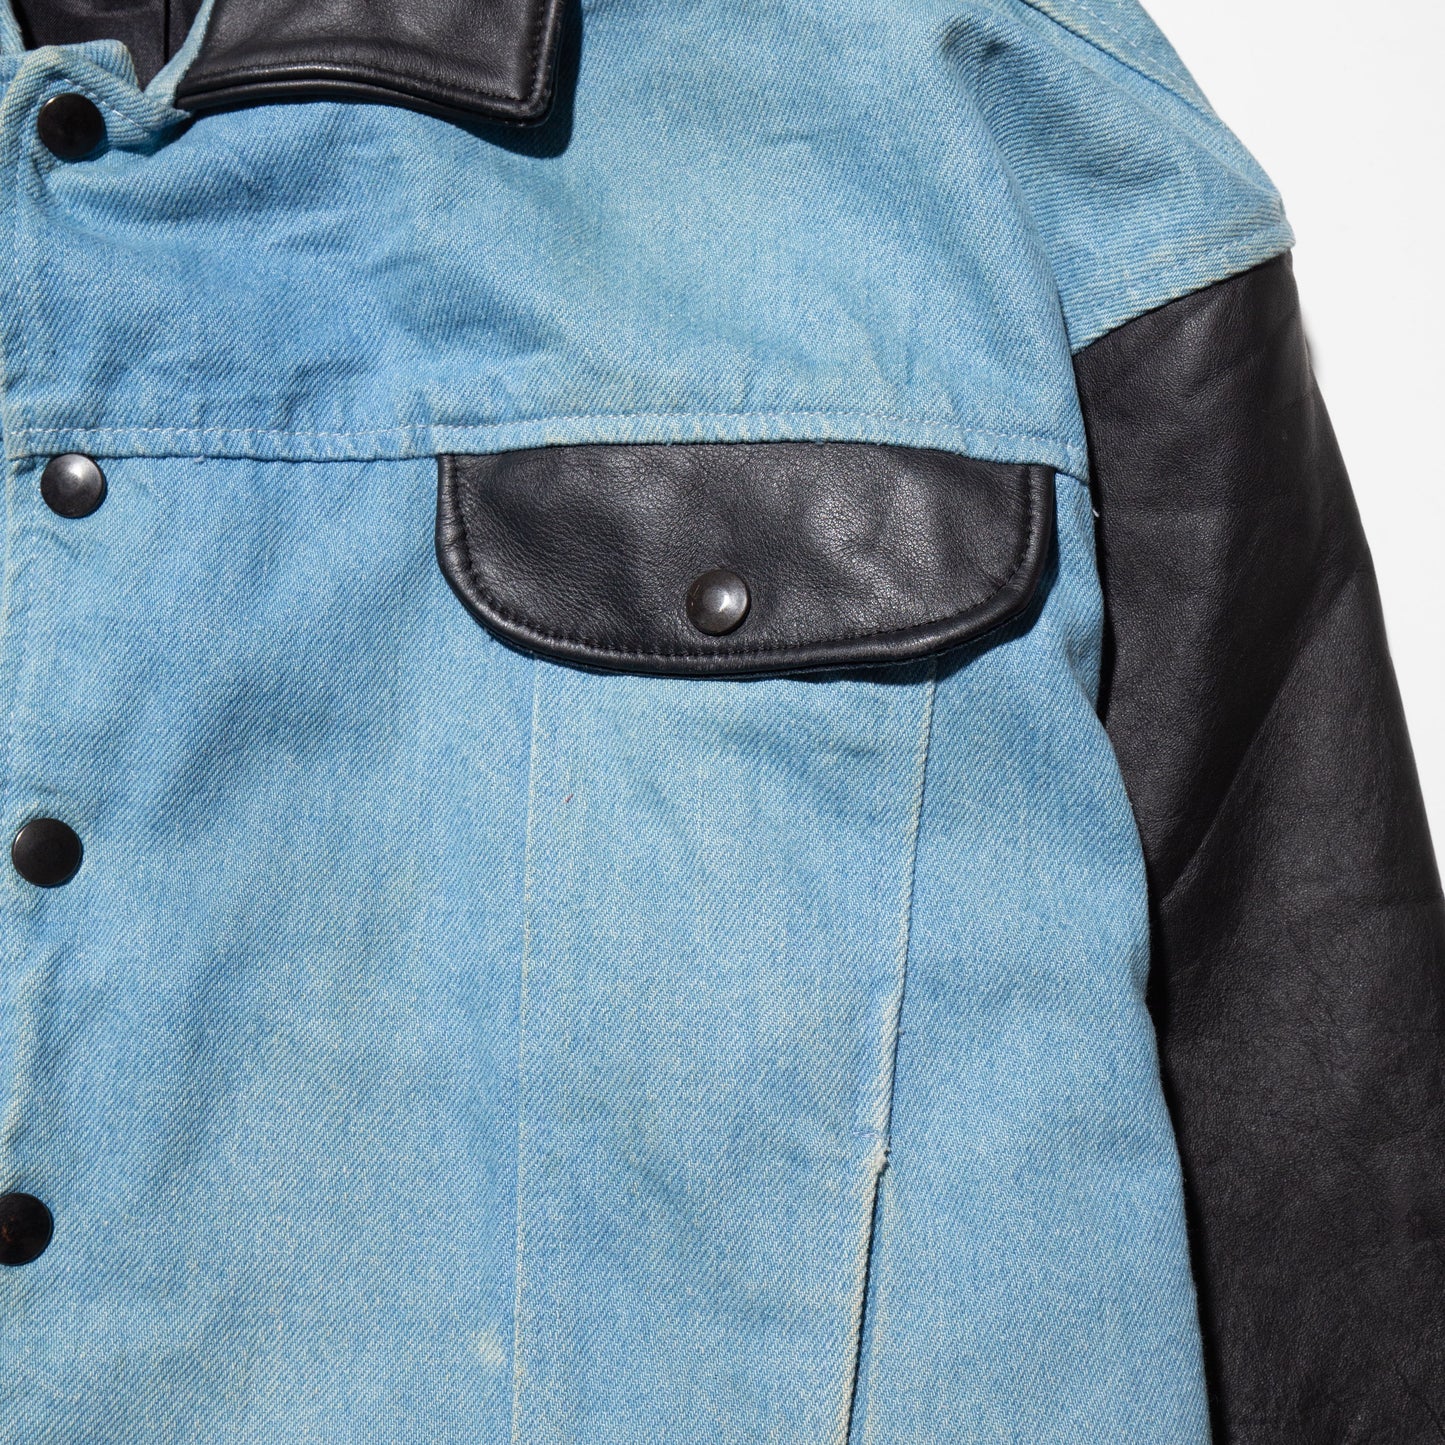 vintage leather combi loose trucker jacket